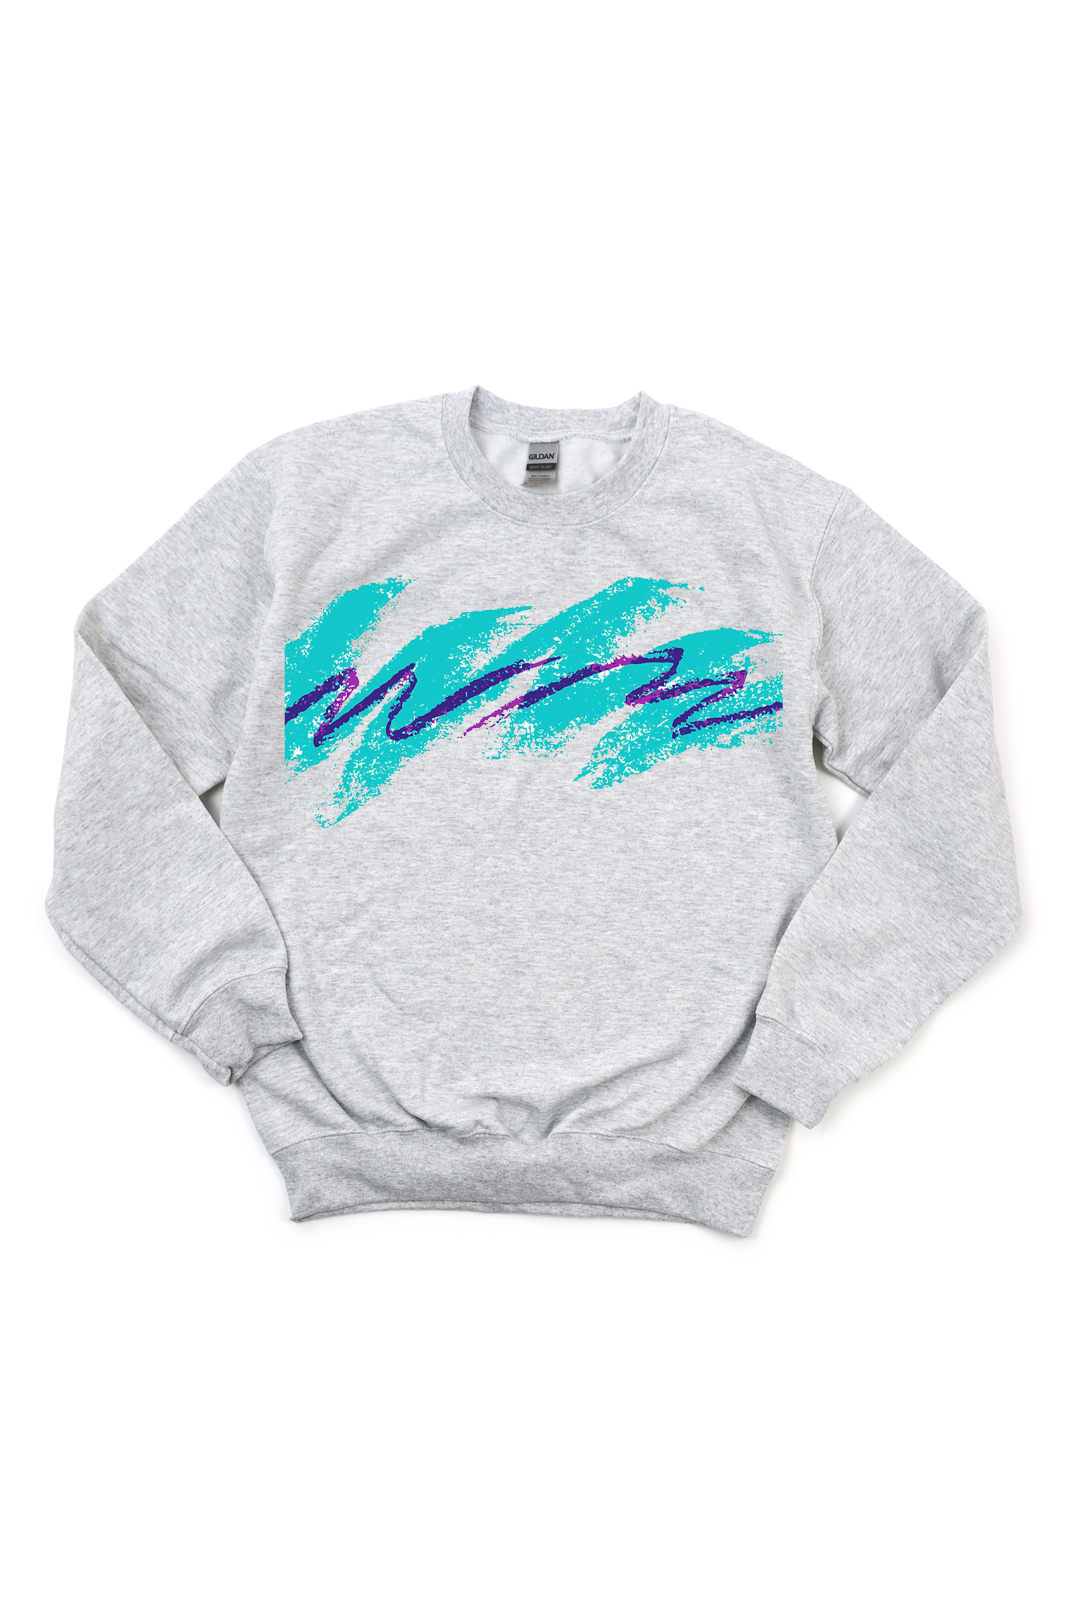 90's Wave Ash Gray Tee/Sweatshirt